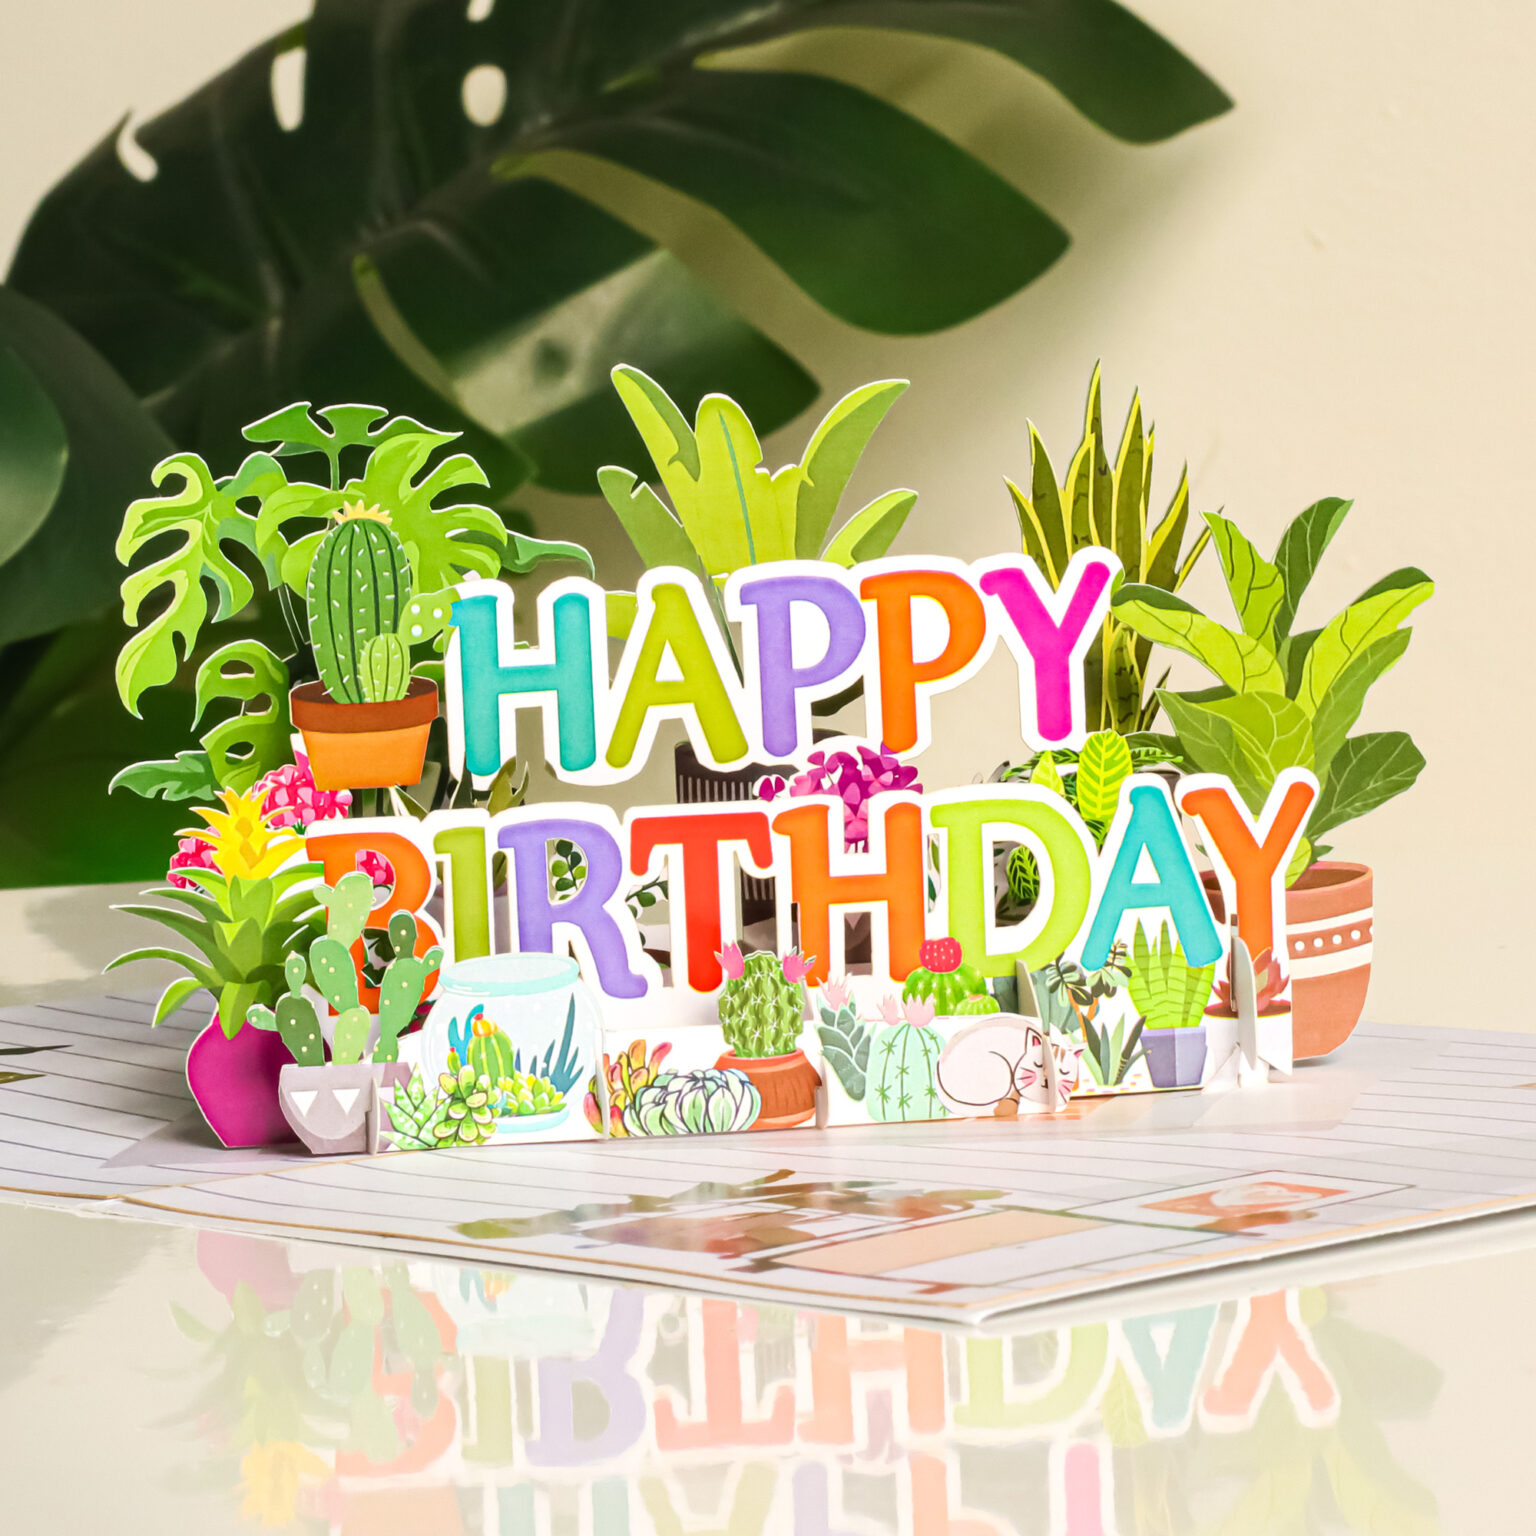 3D-birthday-card-pop-up-card-3D-greeting-card-custom-thank-you-cards-custom-birthday-cards-custom-card-custom-printed-cards-custom-greeting-cards-custom-birthday-cards